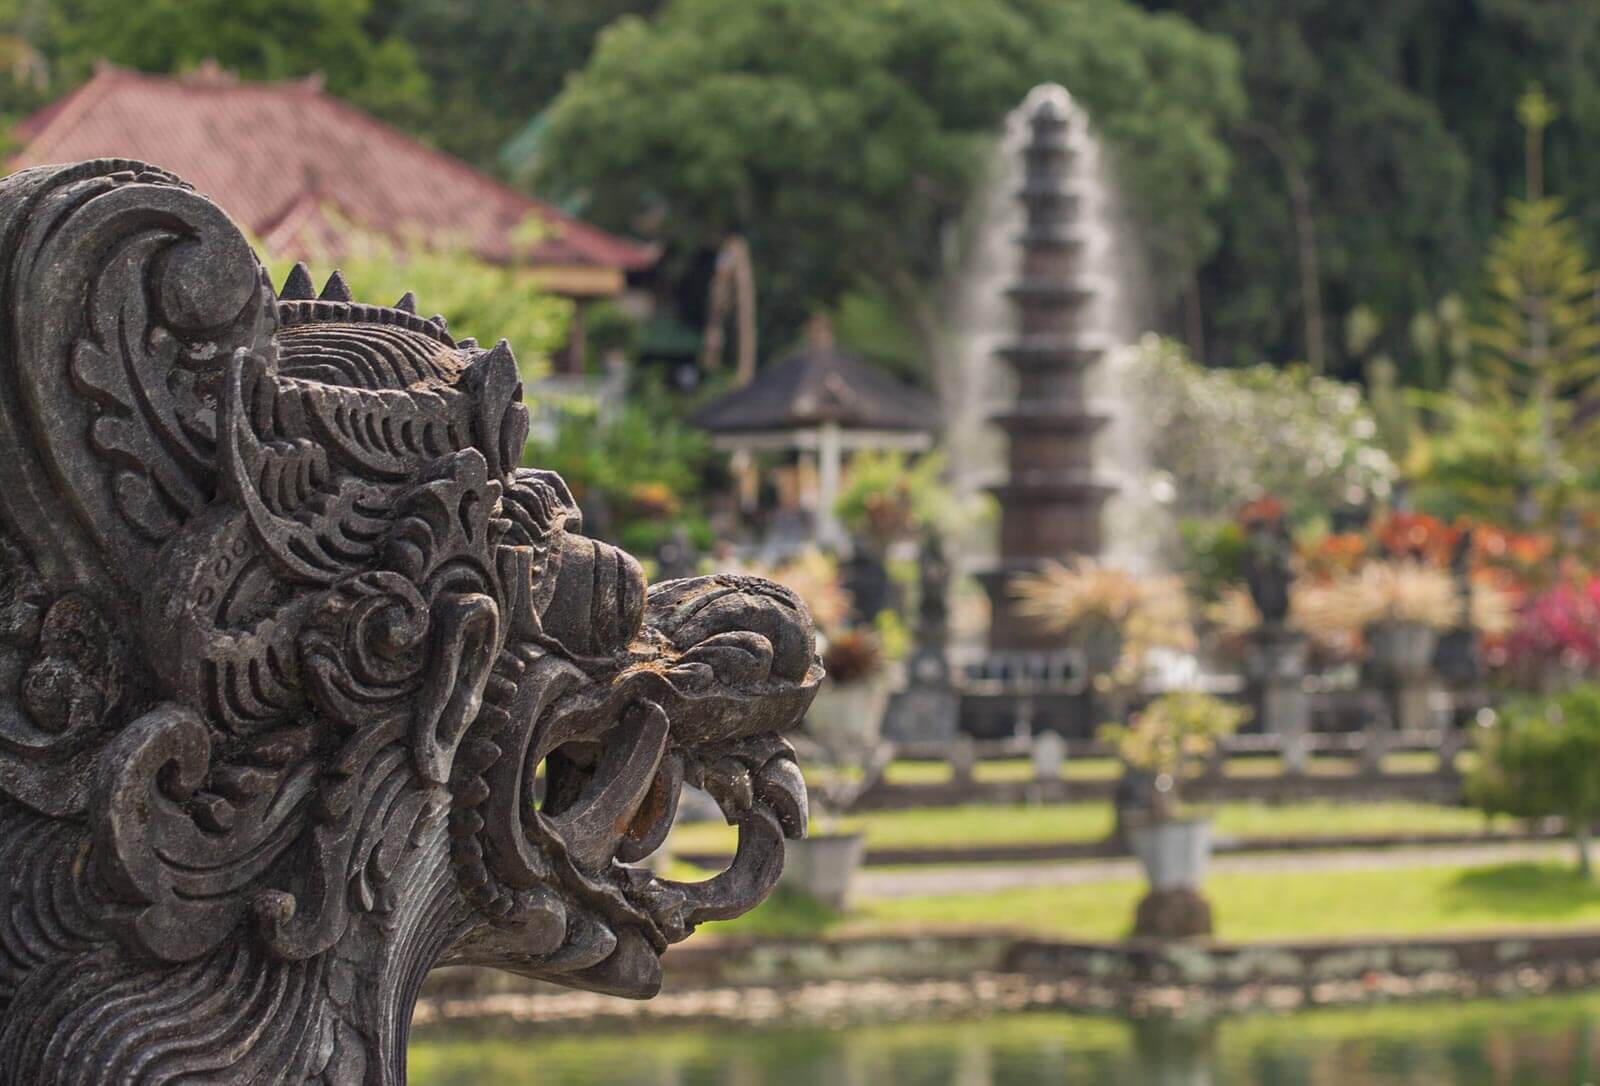 should I visit Bali?